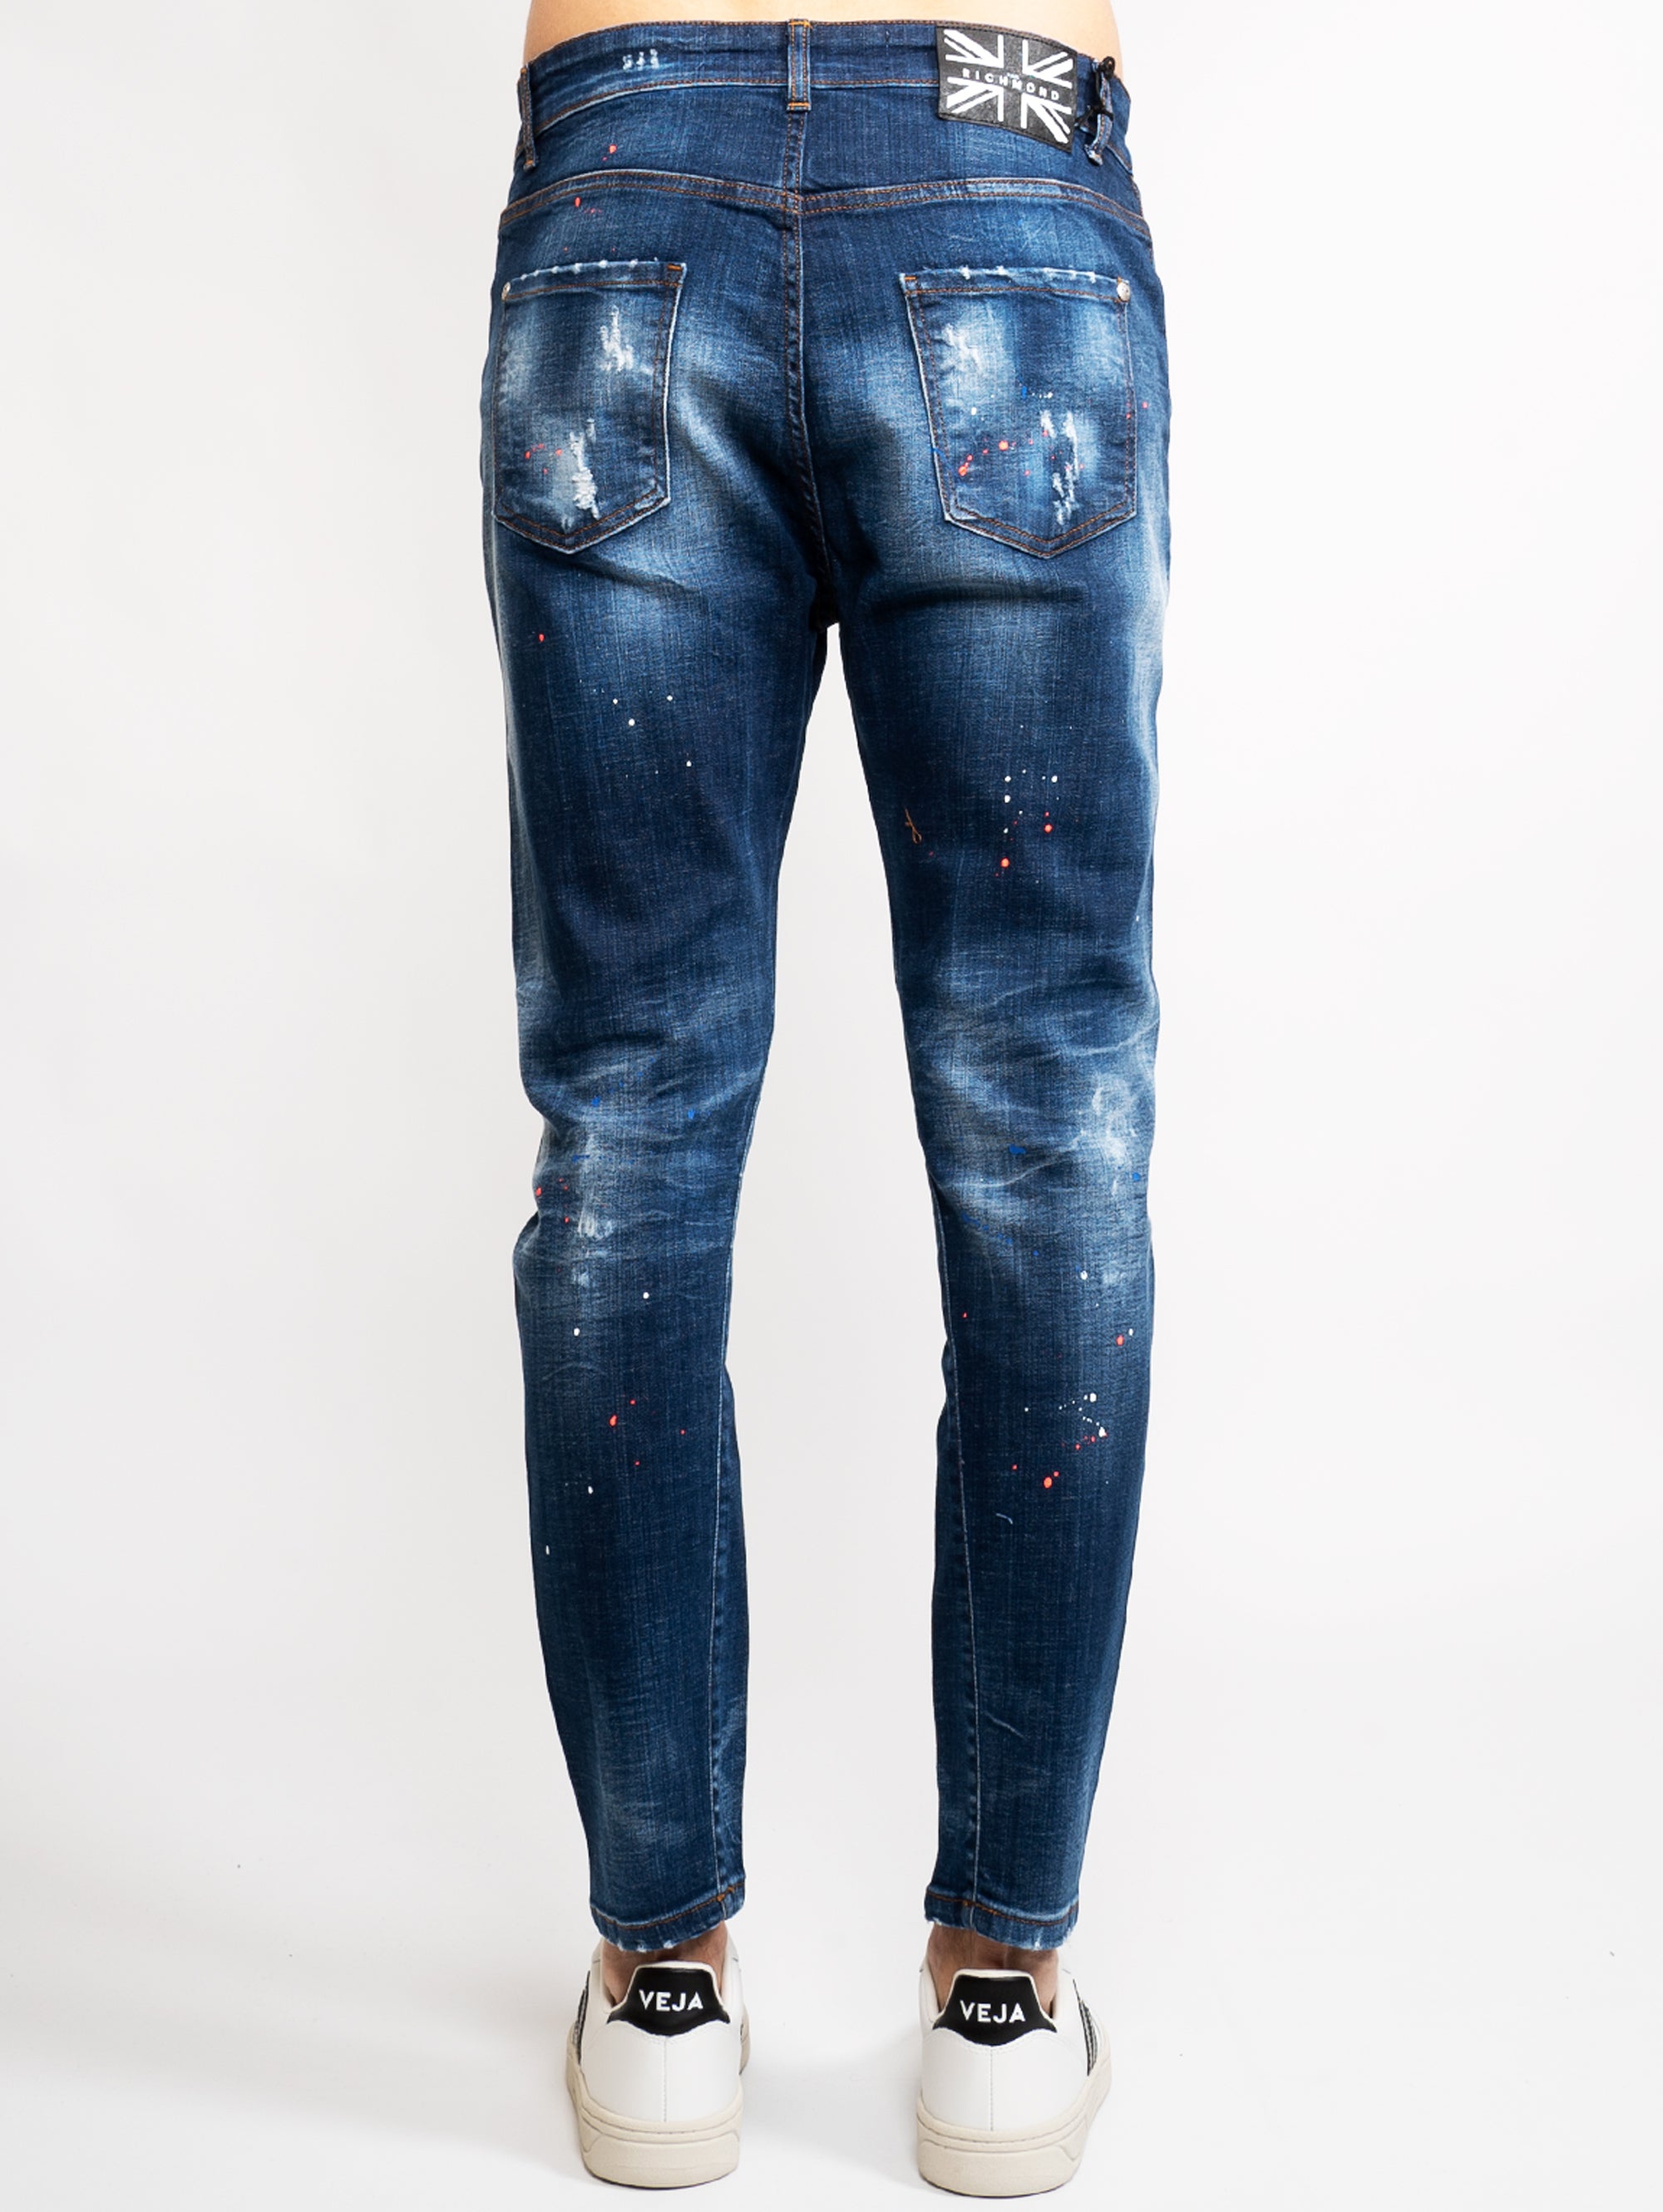 Jeans with Blue Paint Splatters